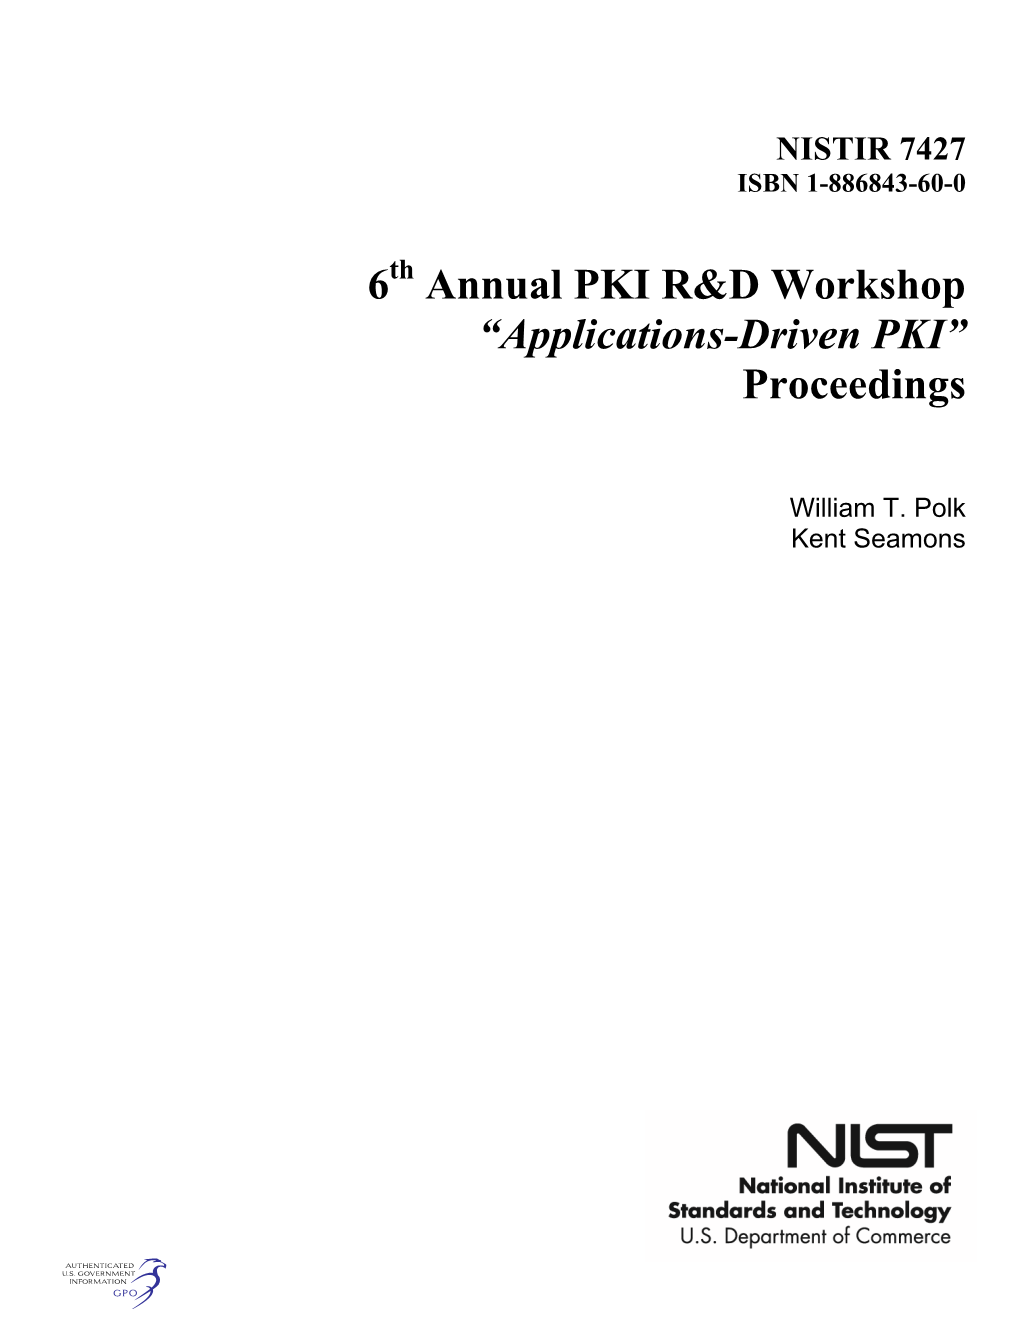 6Th Annual PKI R&D Workshop Applications-Driven